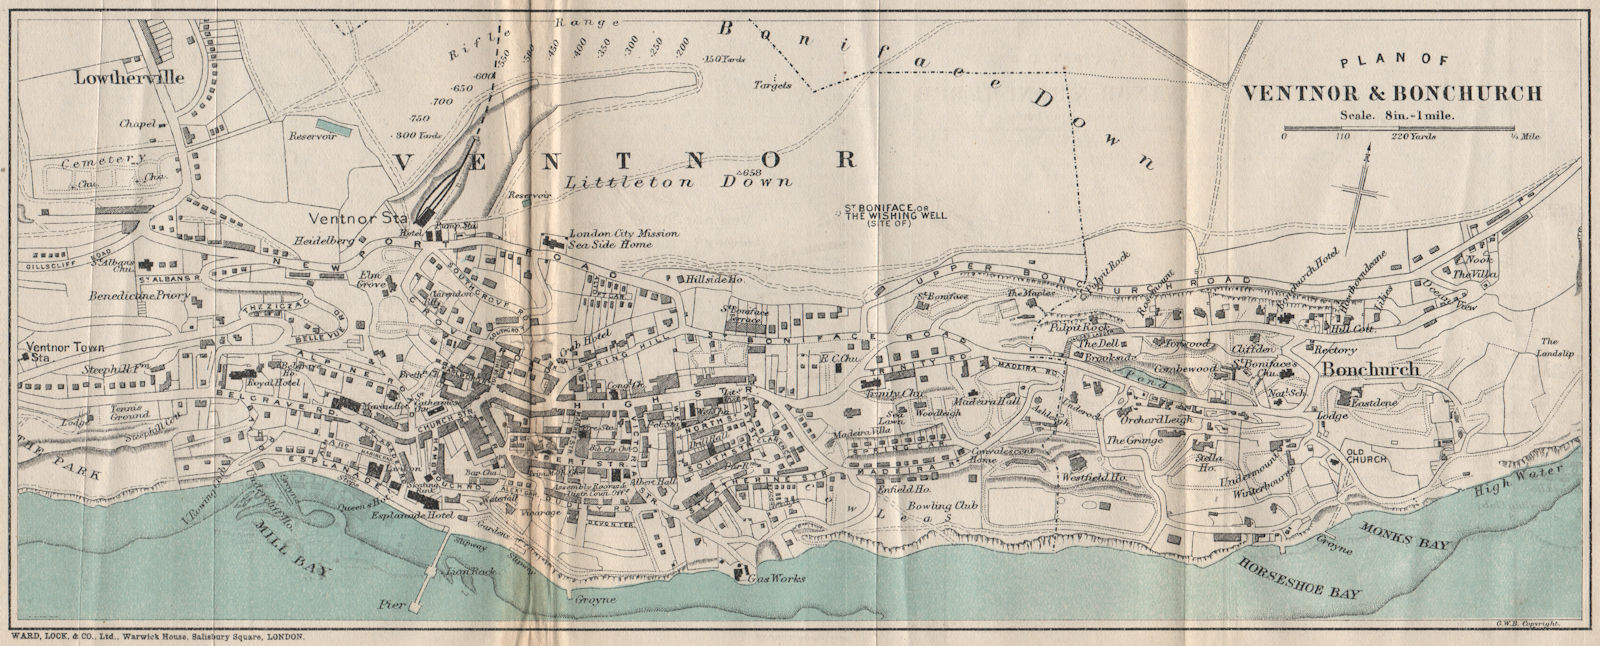 VENTNOR & BONCHURCH vintage town/city plan. Isle of Wight. WARD LOCK 1908 map